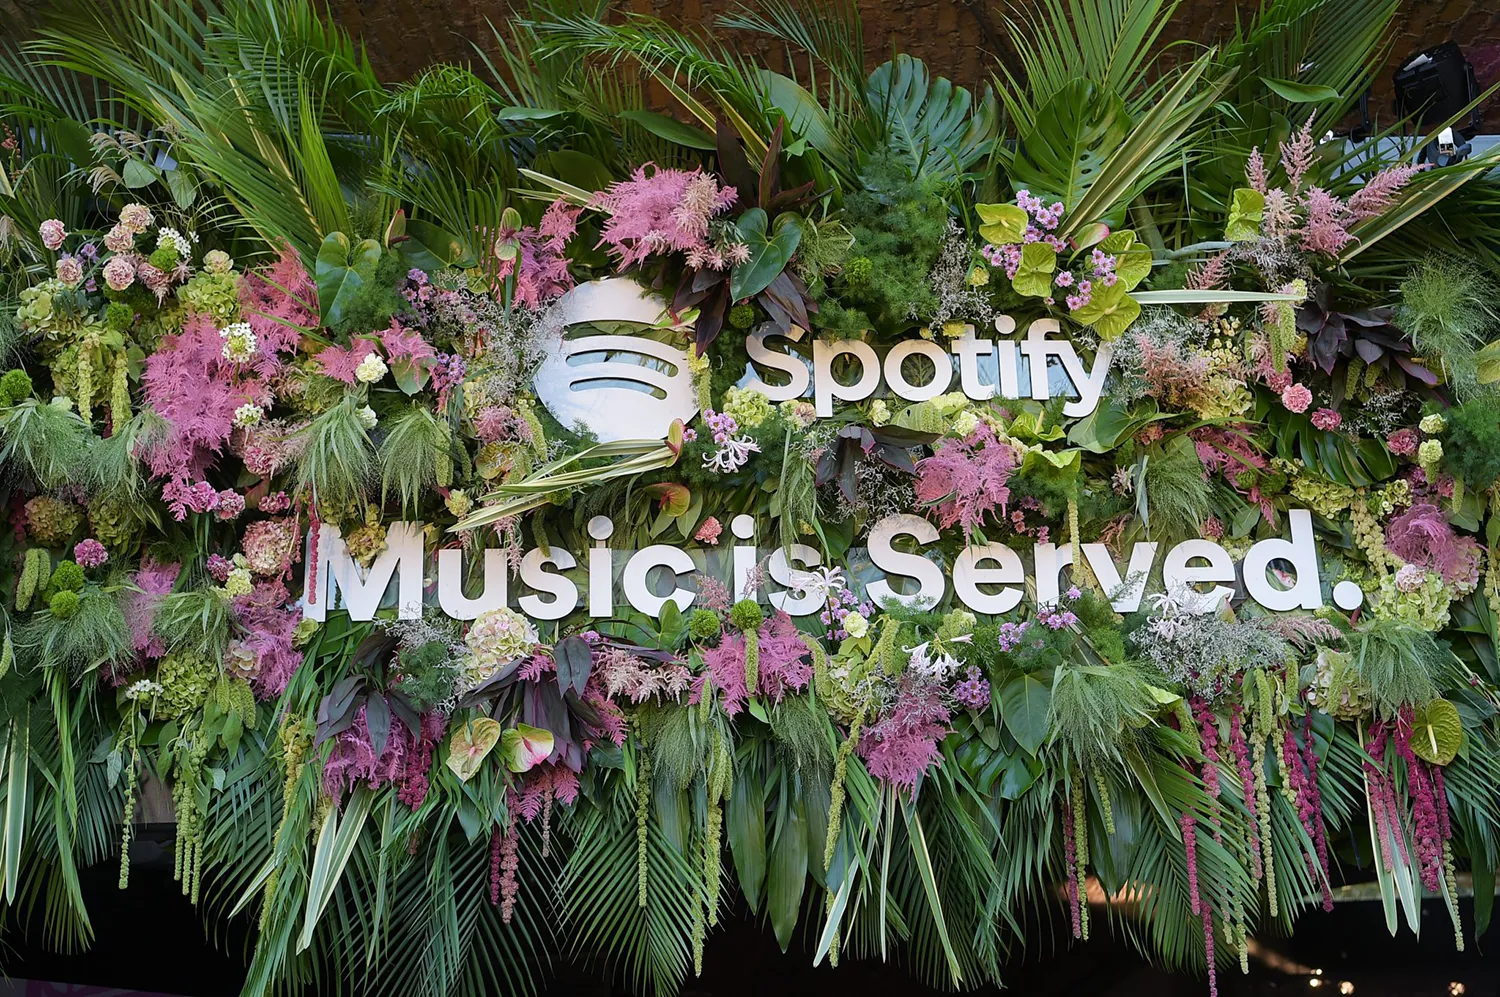 Spotify event logo